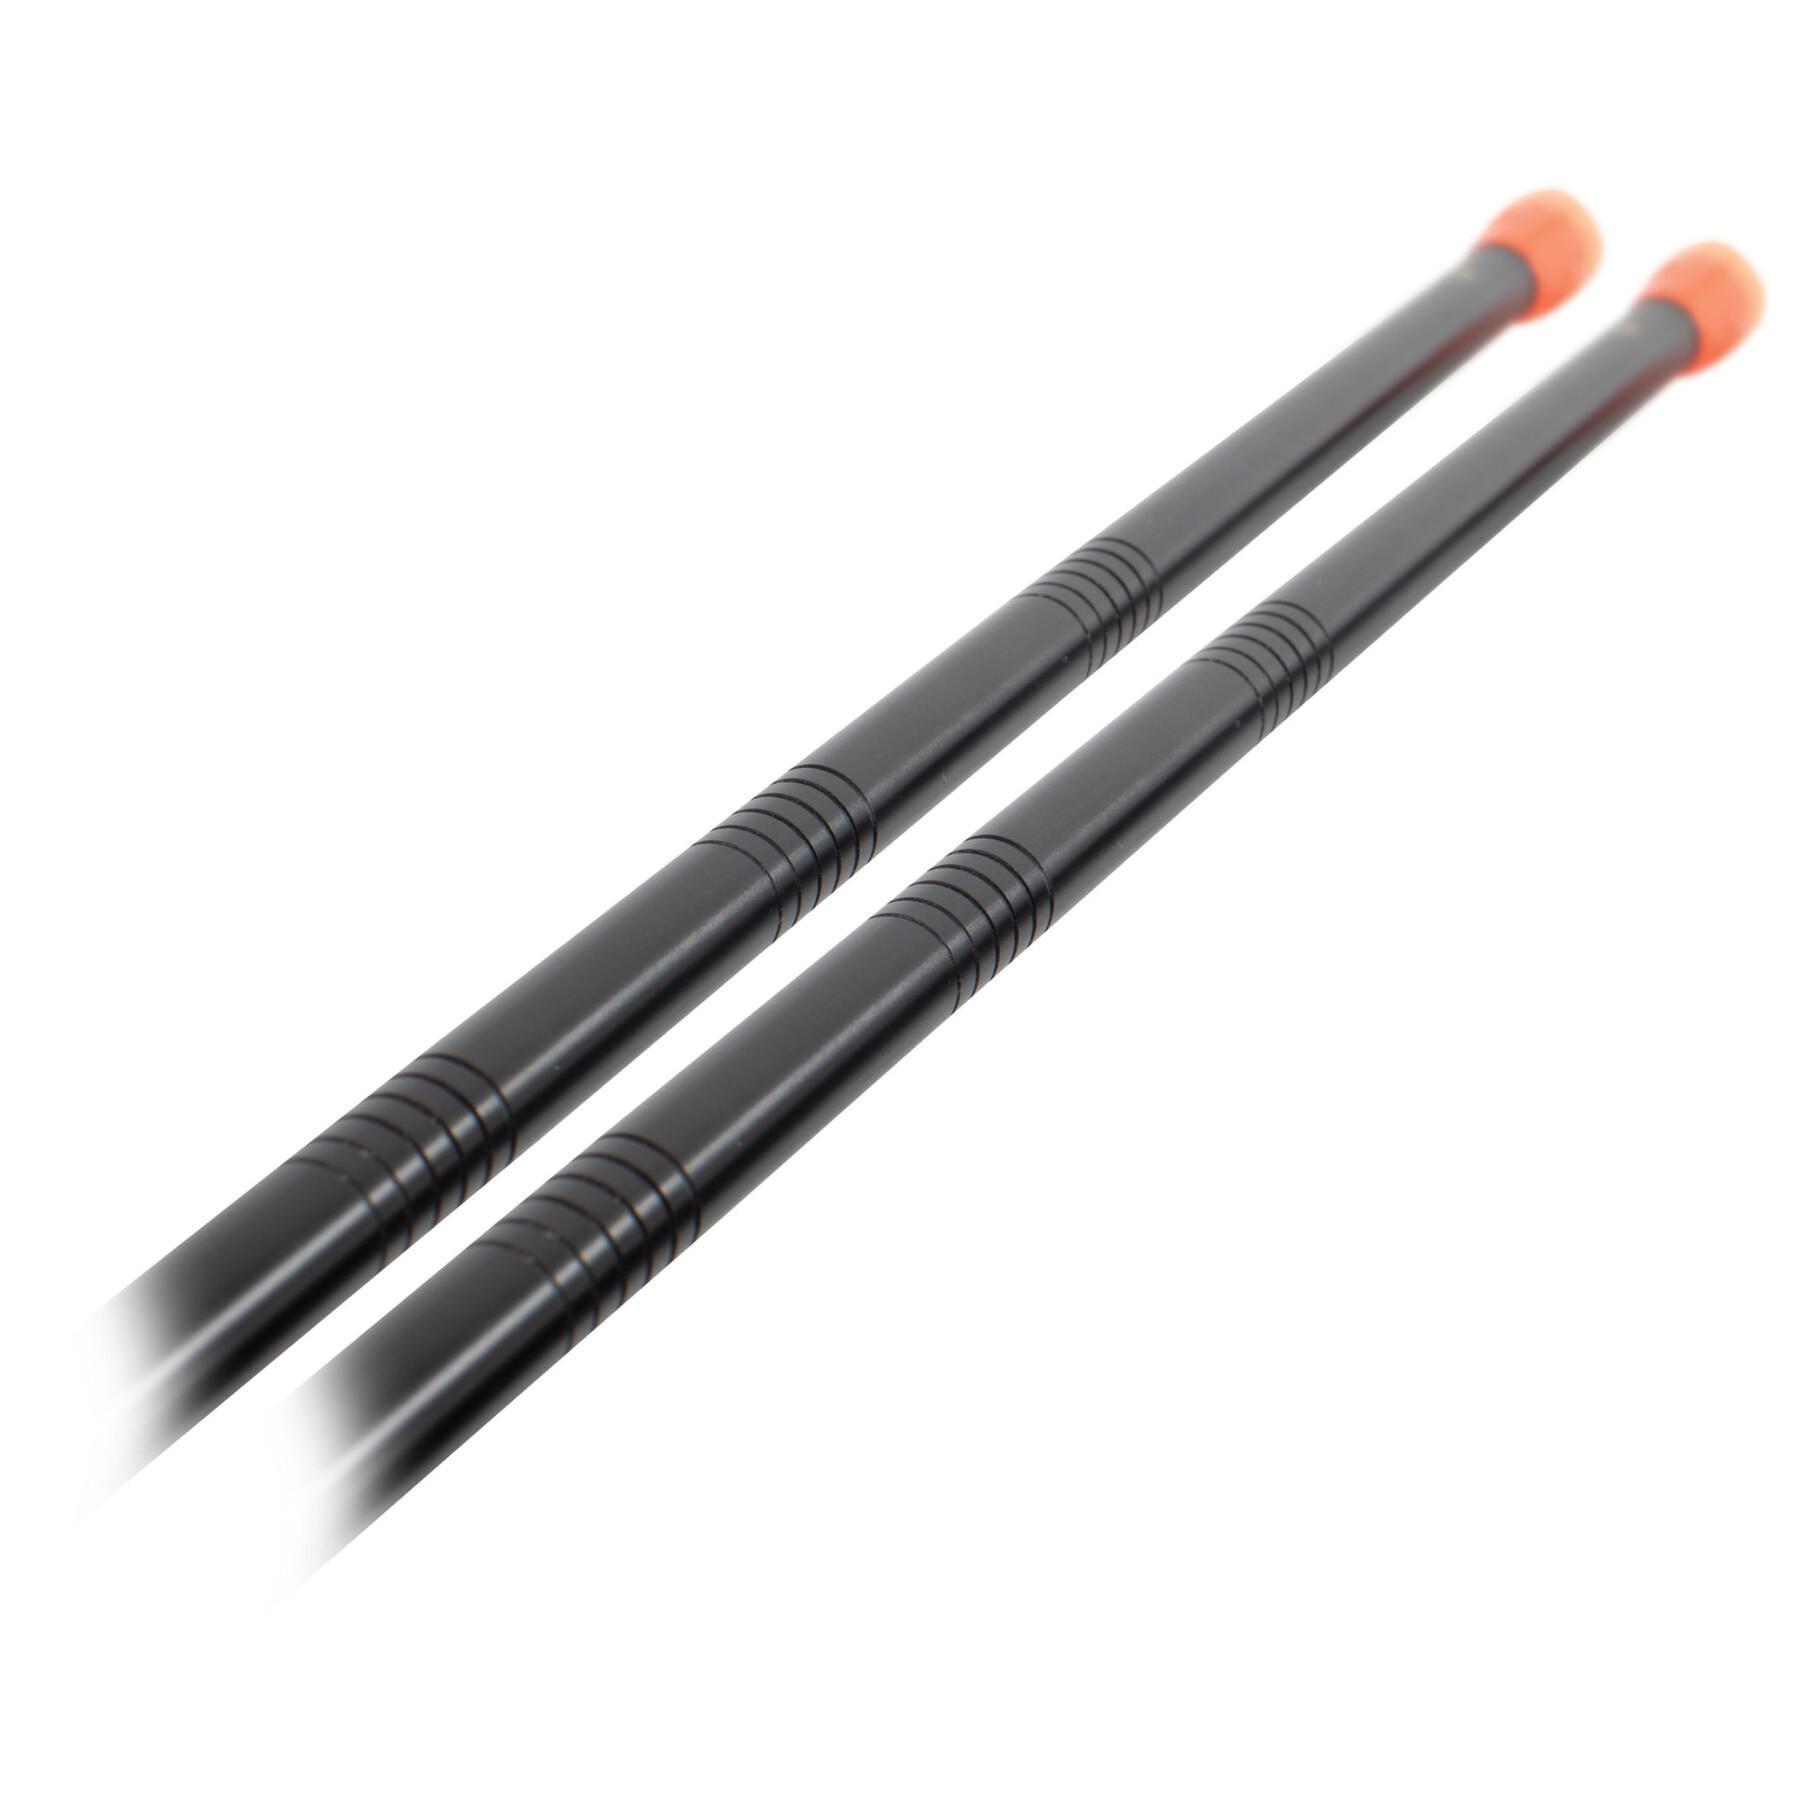 Spike marker for aqua products cygnet 24/7 distance sticks